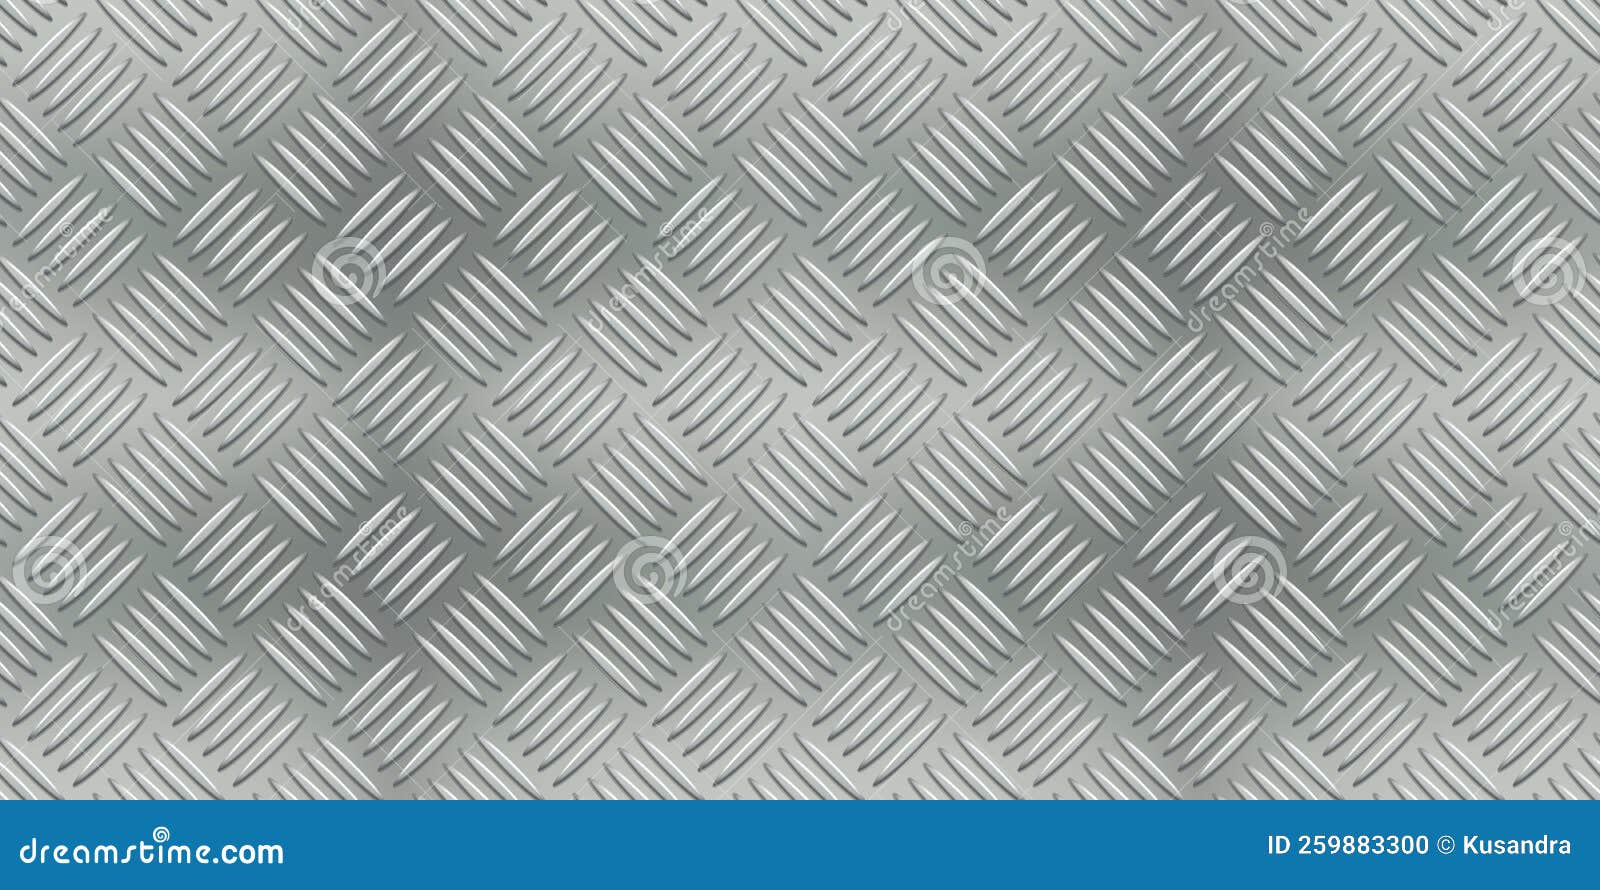 aluminum checkerplate industry realistic seamless pattern